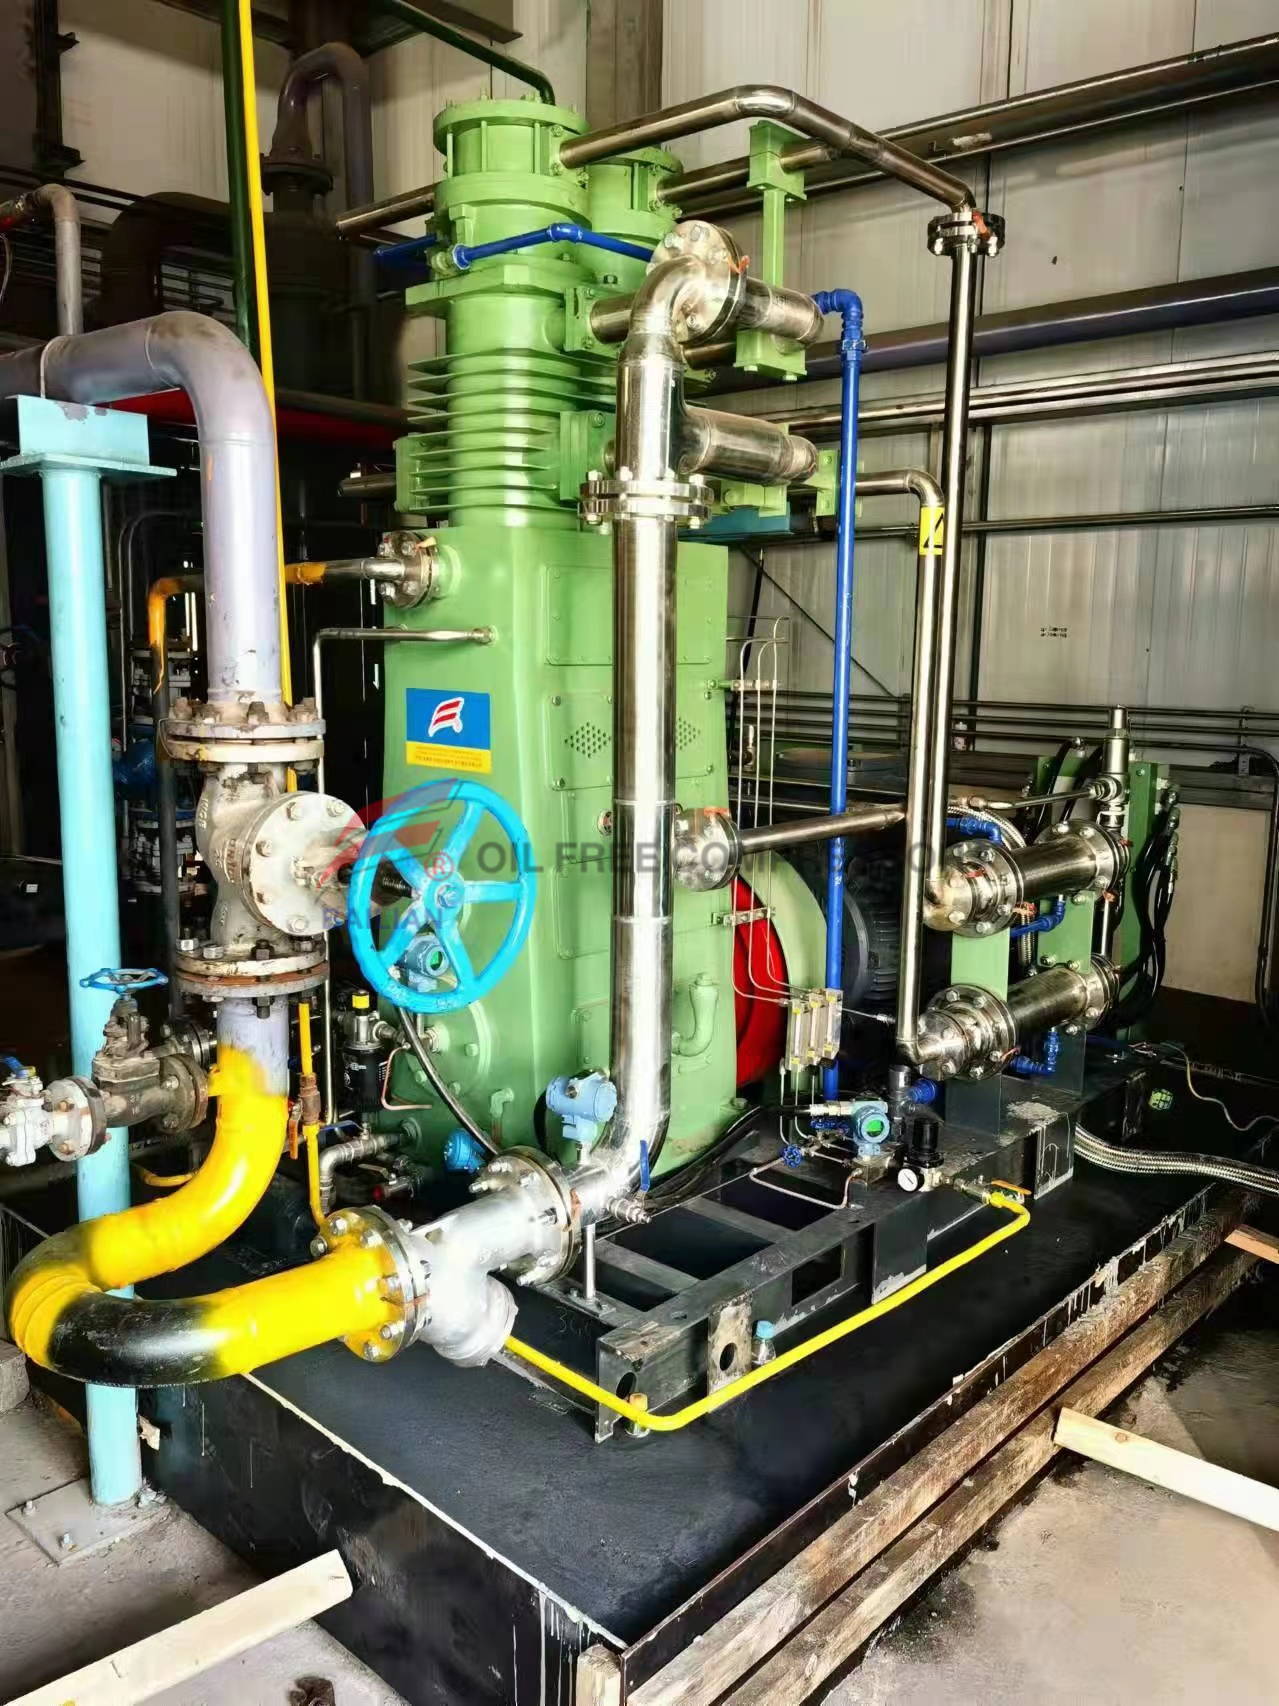 500nm3 Oil Free Oxygen Compressor